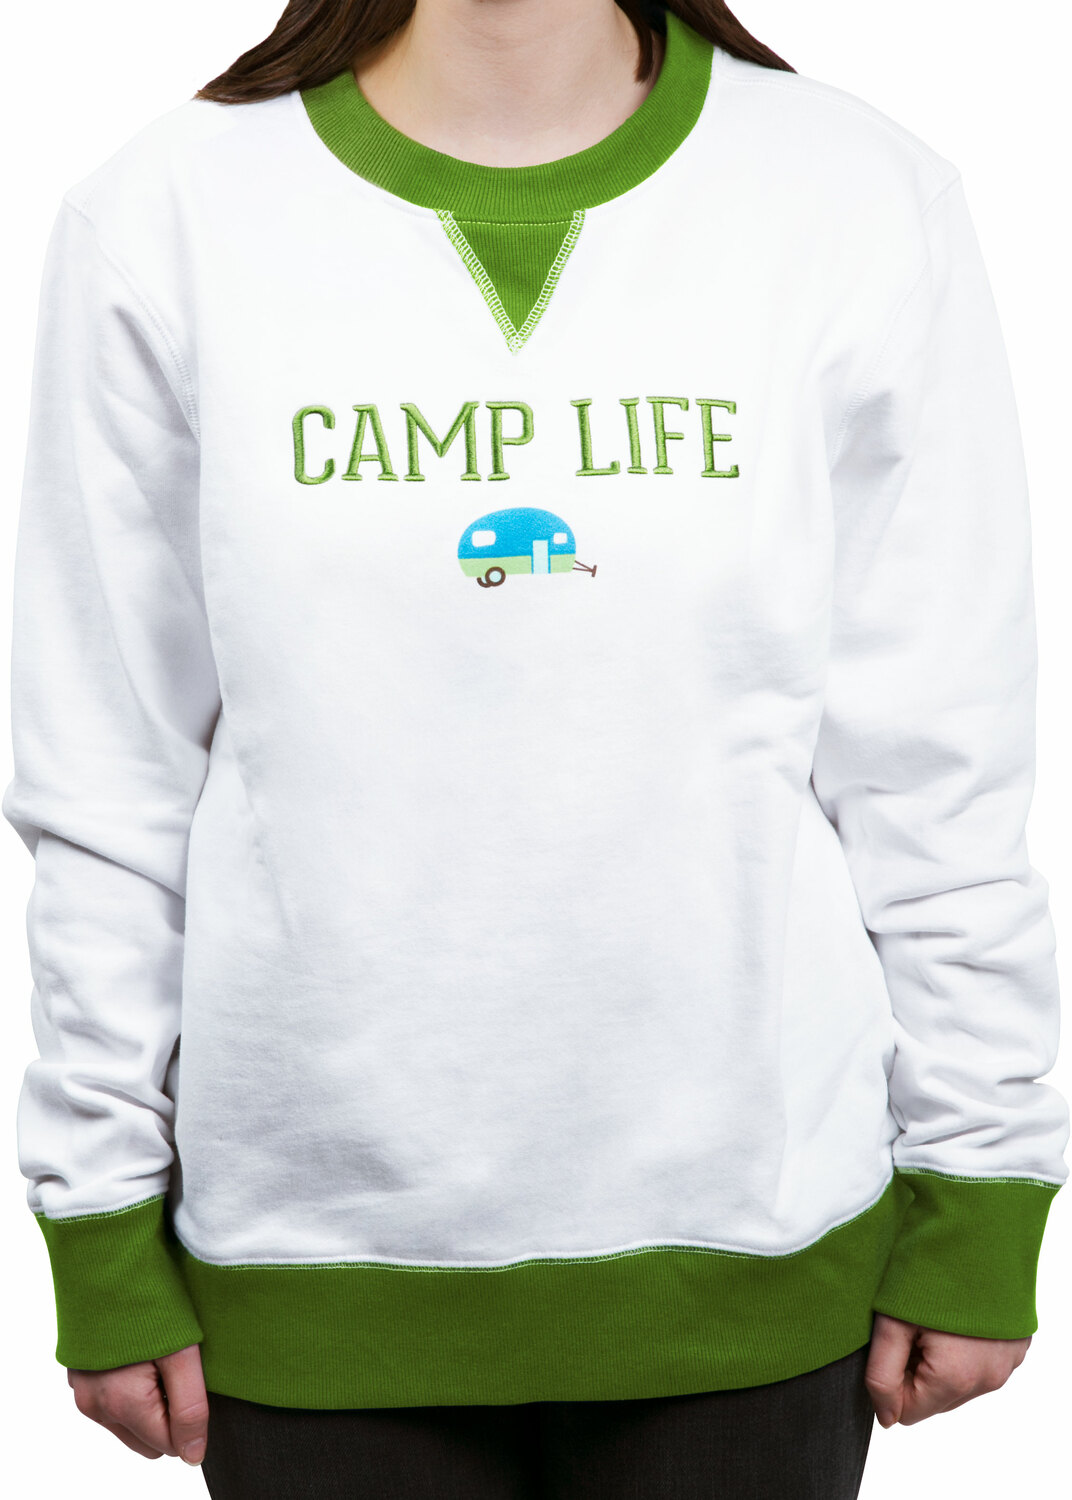 Camp Life by We People - Camp Life - L White Unisex Crewneck Sweatshirt